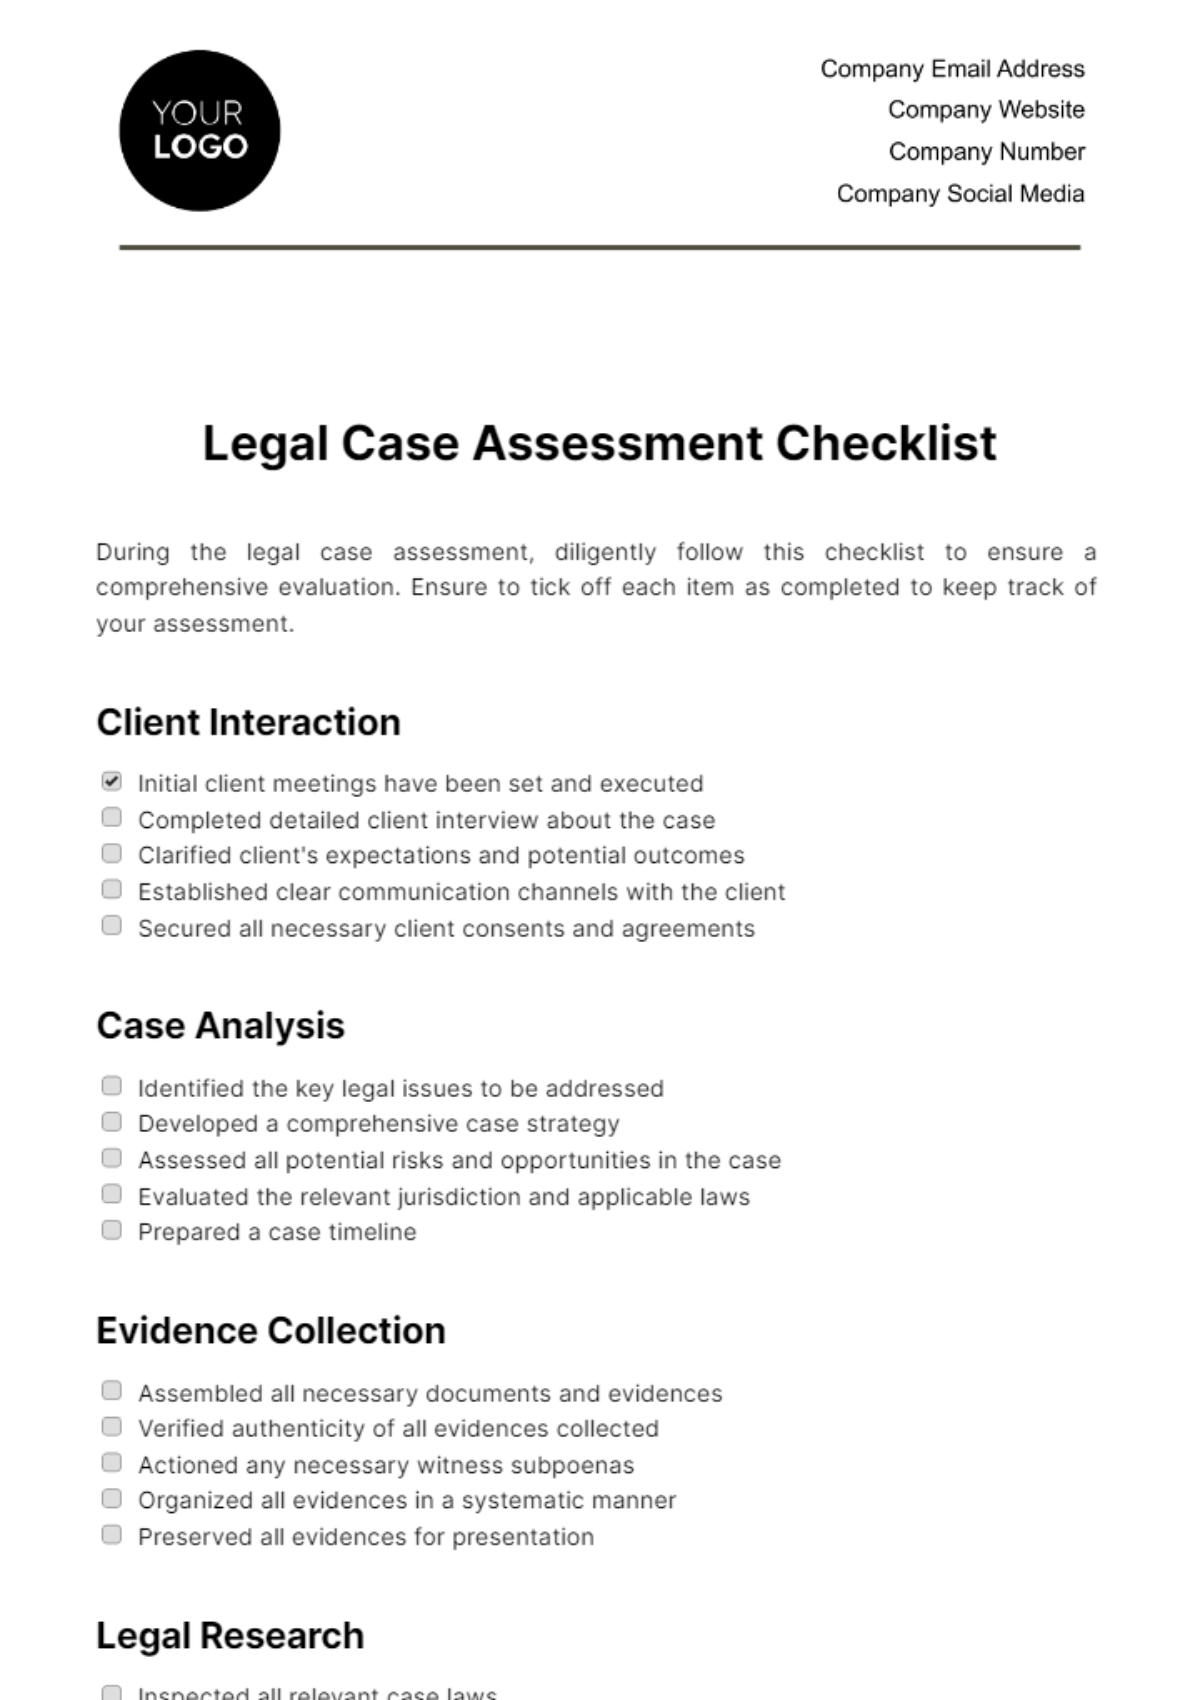 Legal Case Assessment Checklist Template